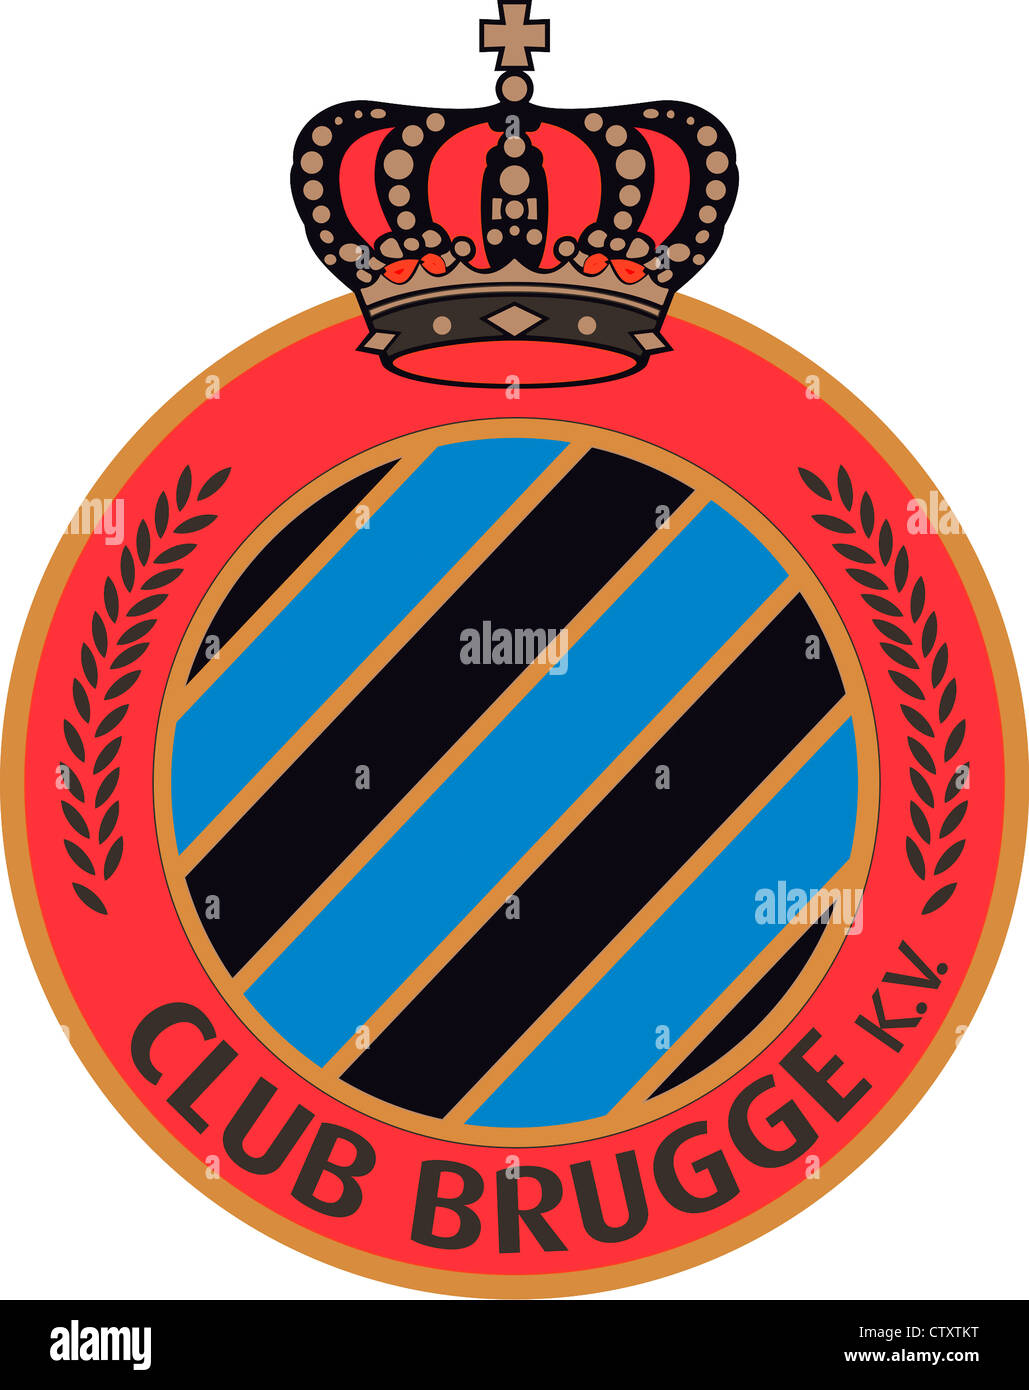 Belgium football logo hi-res stock photography and images - Alamy